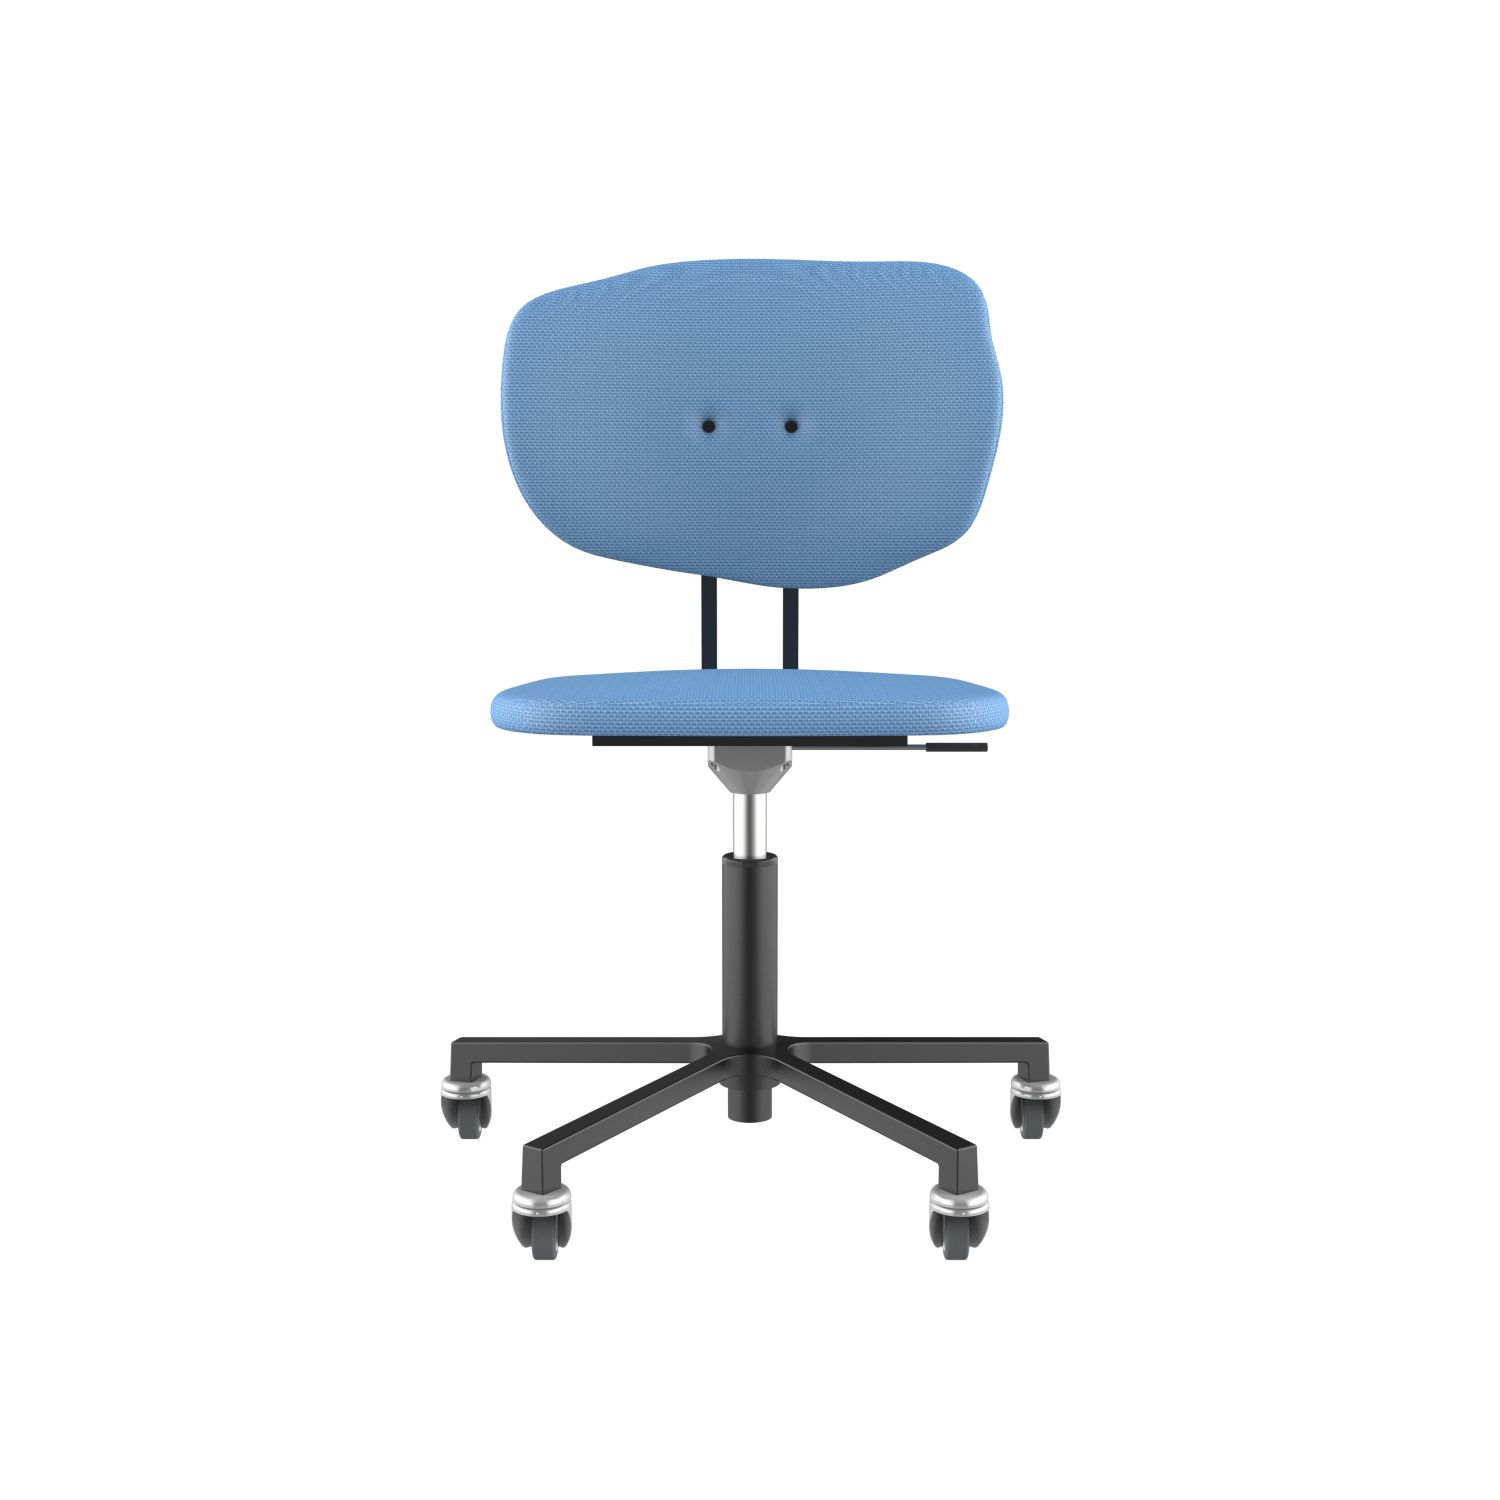 lensvelt maarten baas office chair without armrests backrest f blue horizon 040 black ral9005 soft wheels